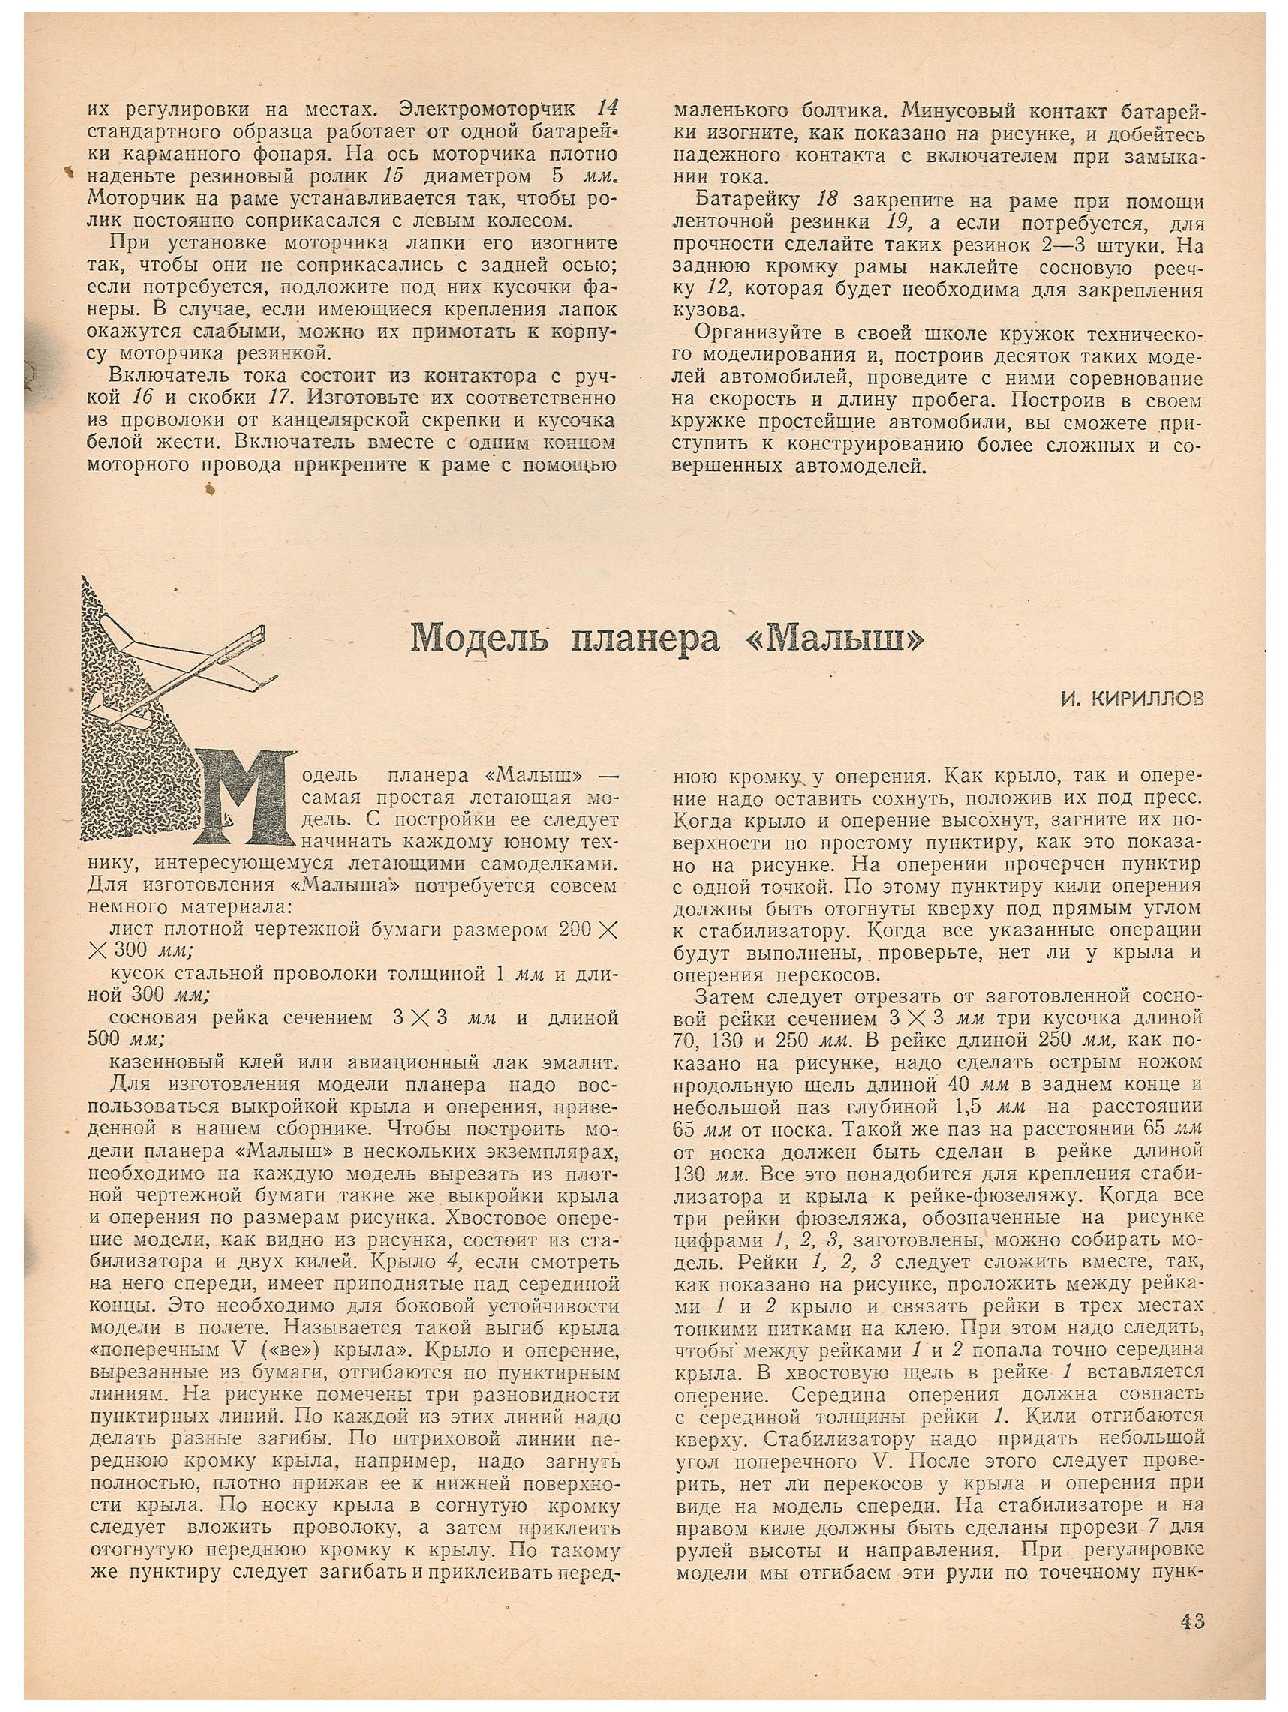 ЮМК 1, 1962, 43 c.